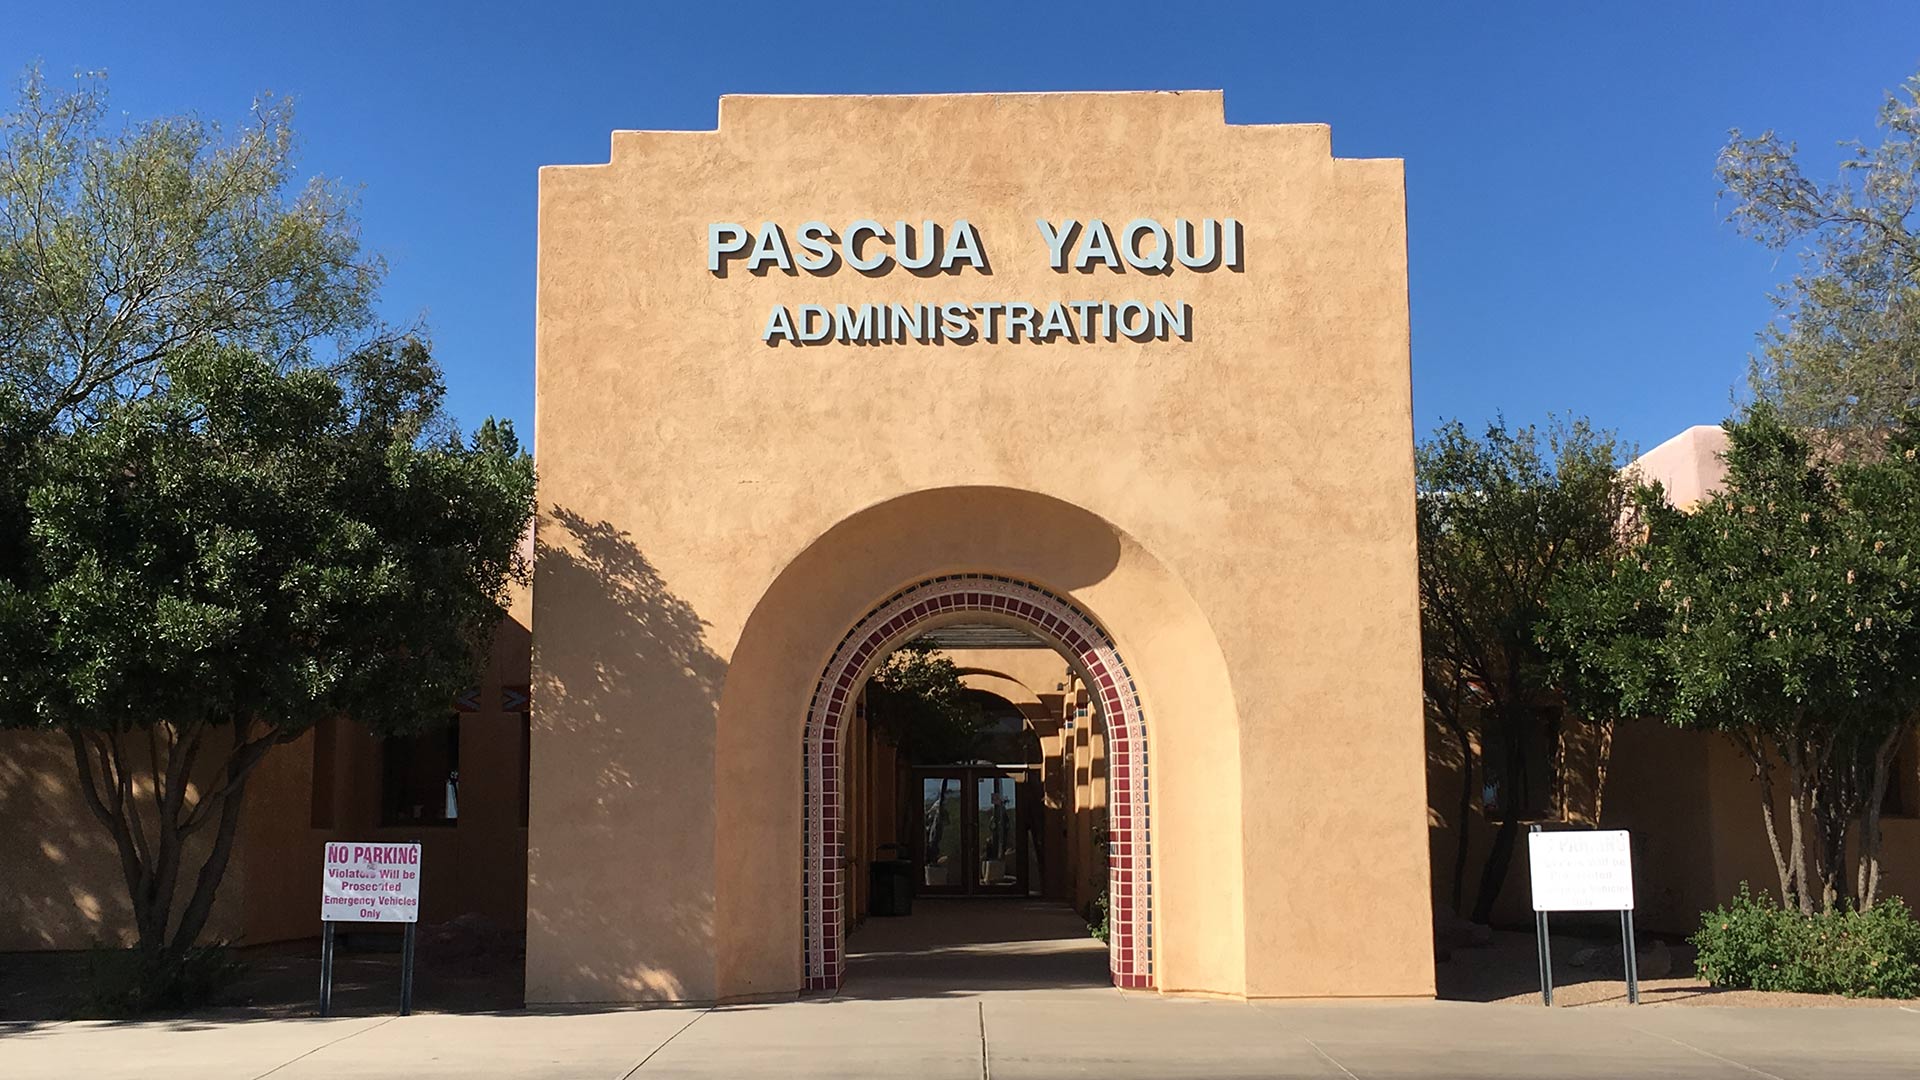 Pascua Yaqui administration